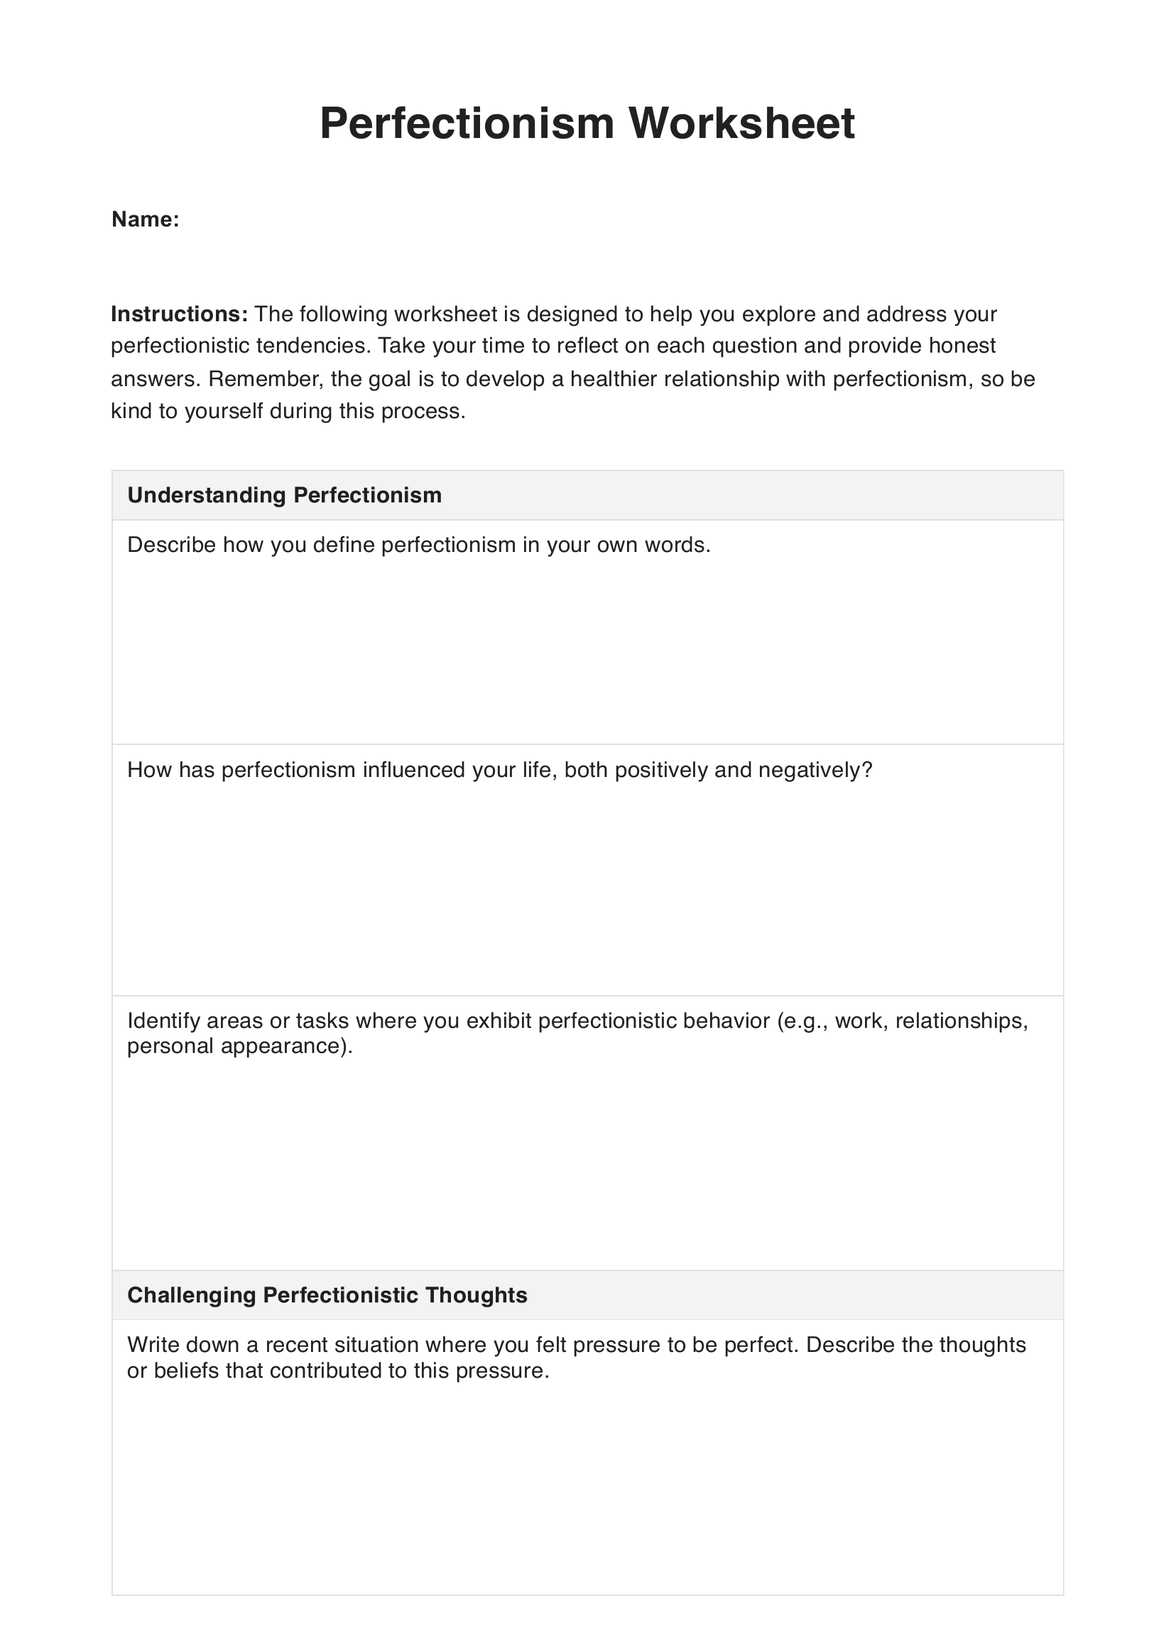 Perfectionism Worksheet PDF Example